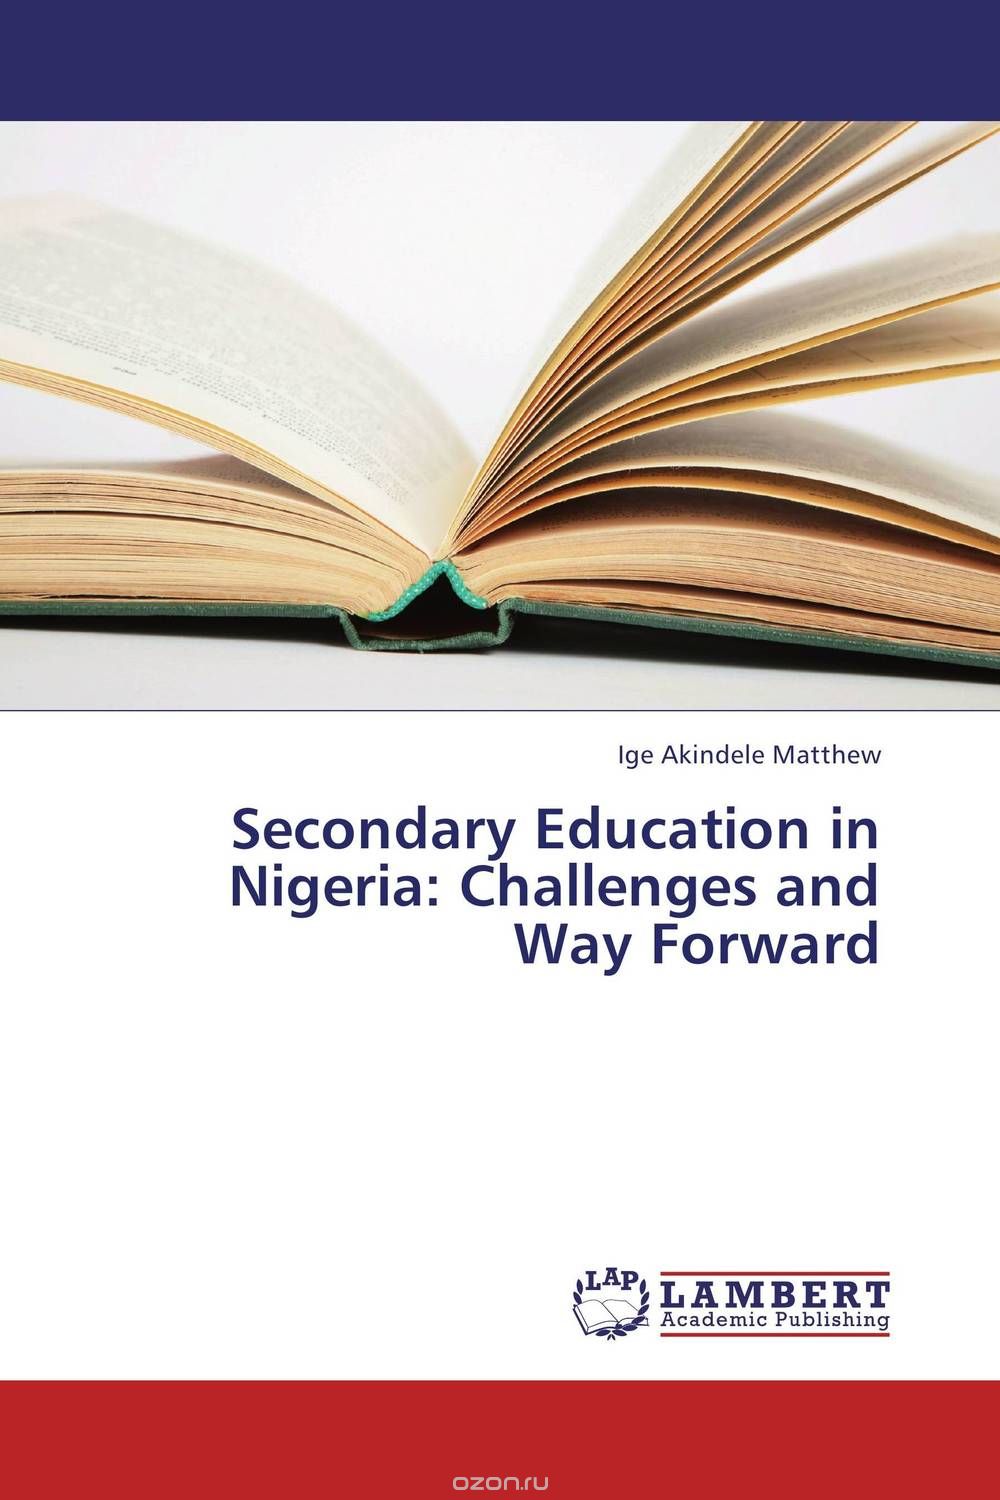 Скачать книгу "Secondary Education in Nigeria: Challenges and Way Forward"